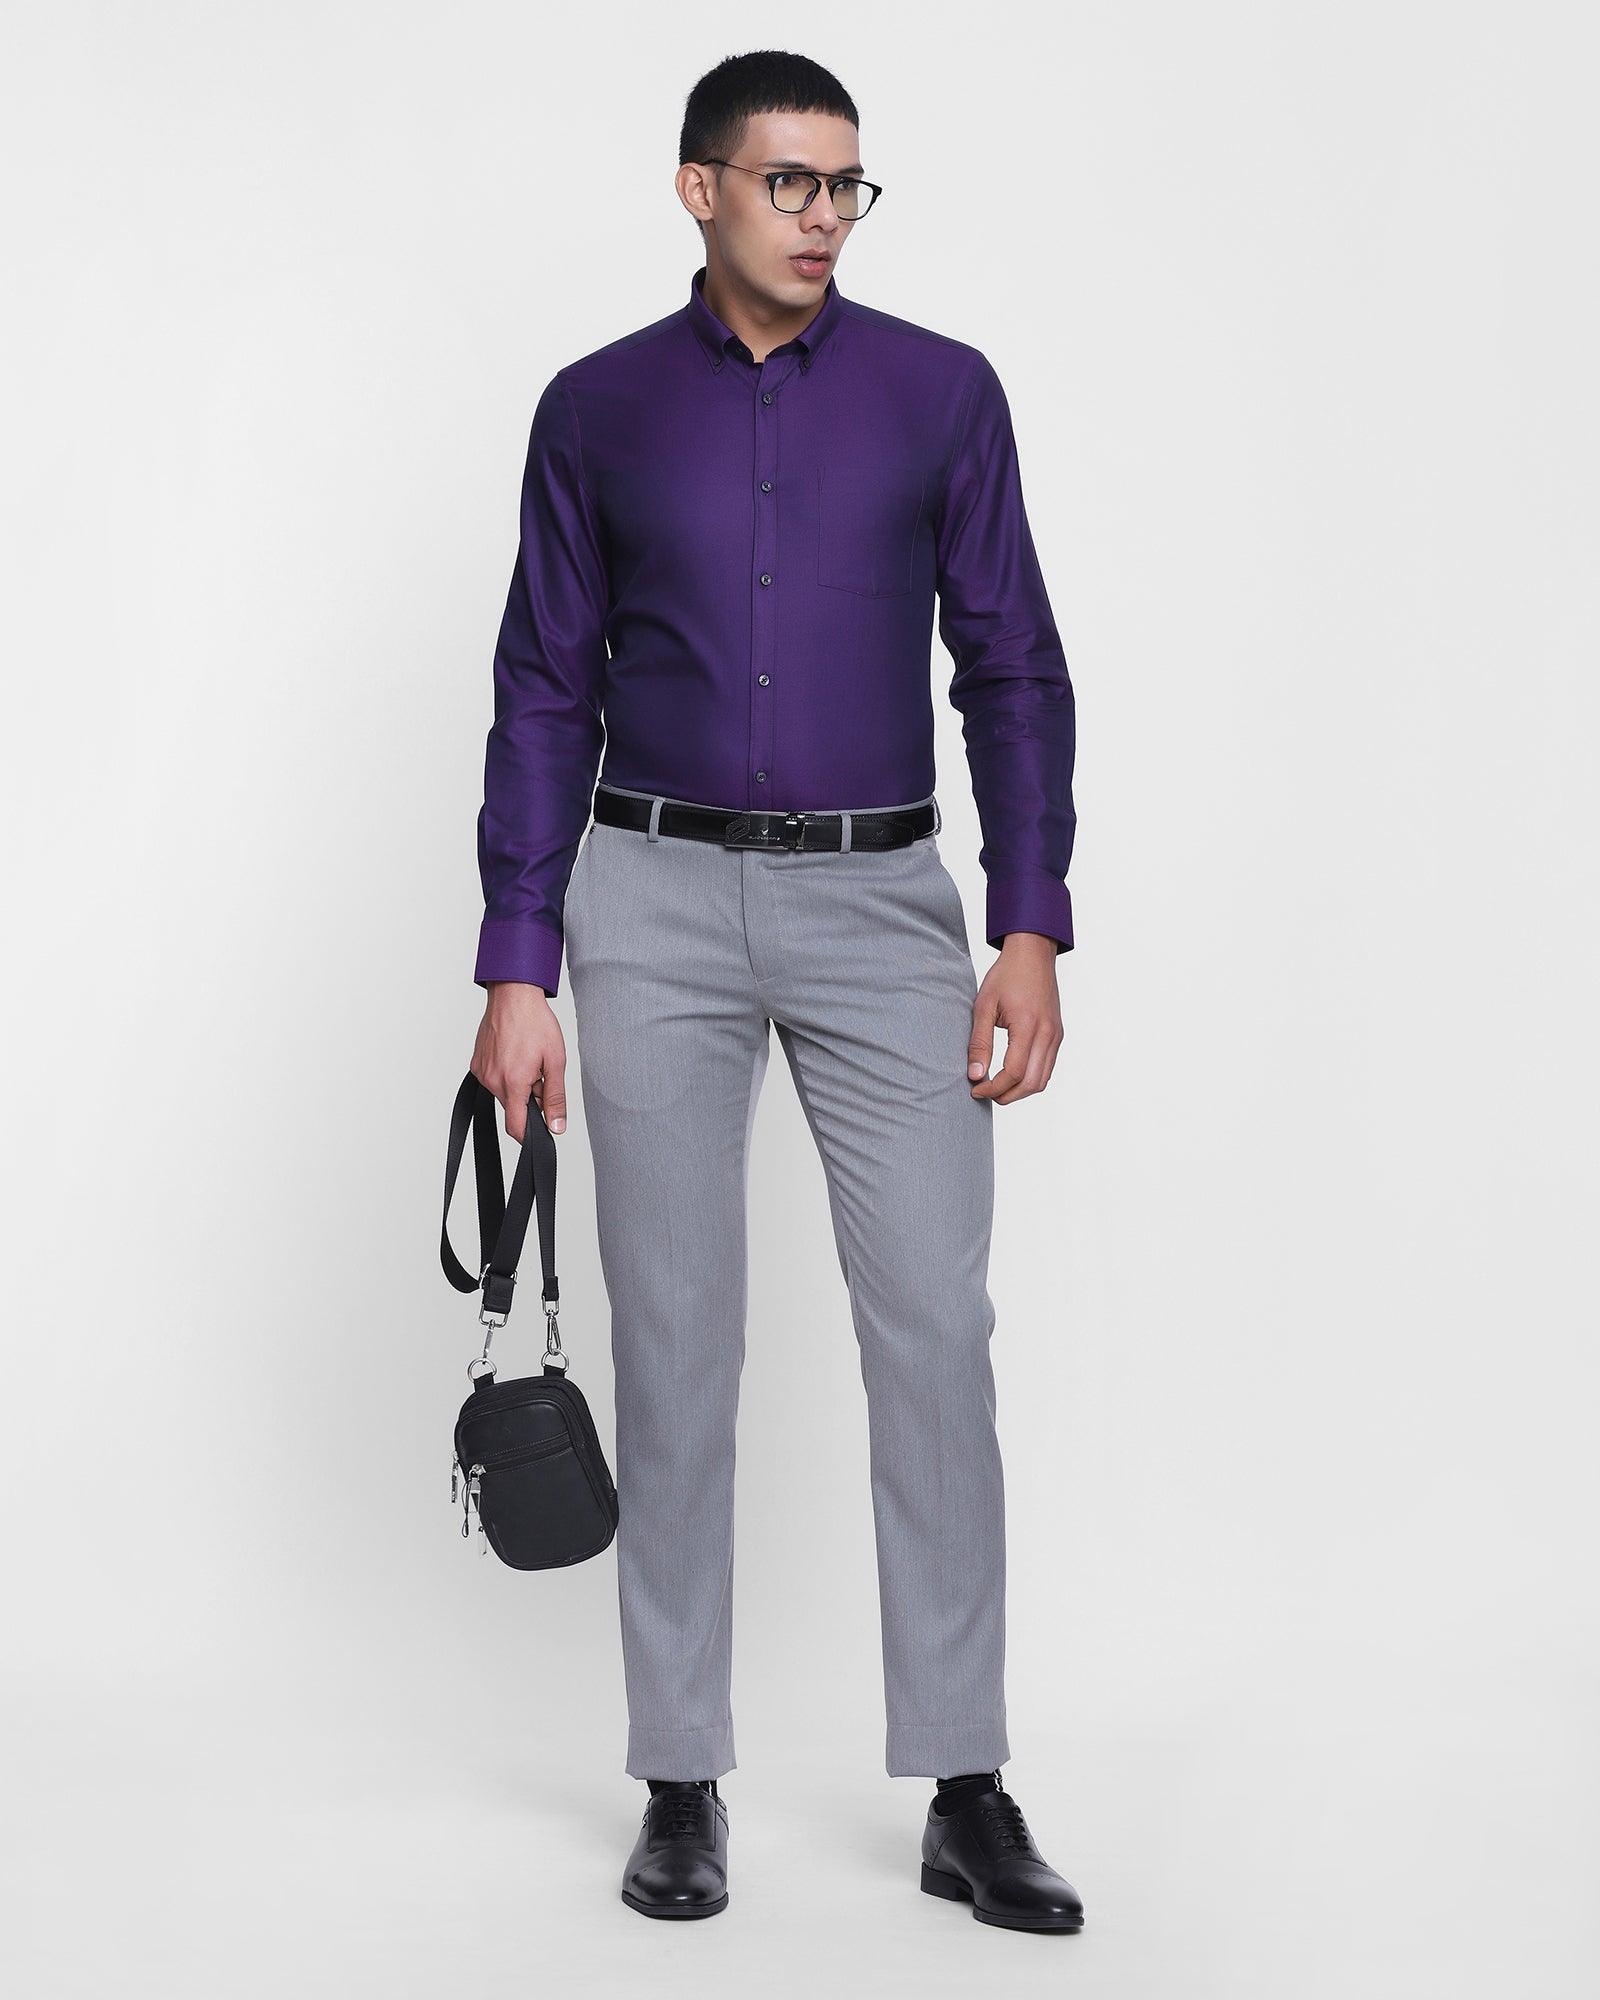 Formal Purple Textured Shirt - Dilan